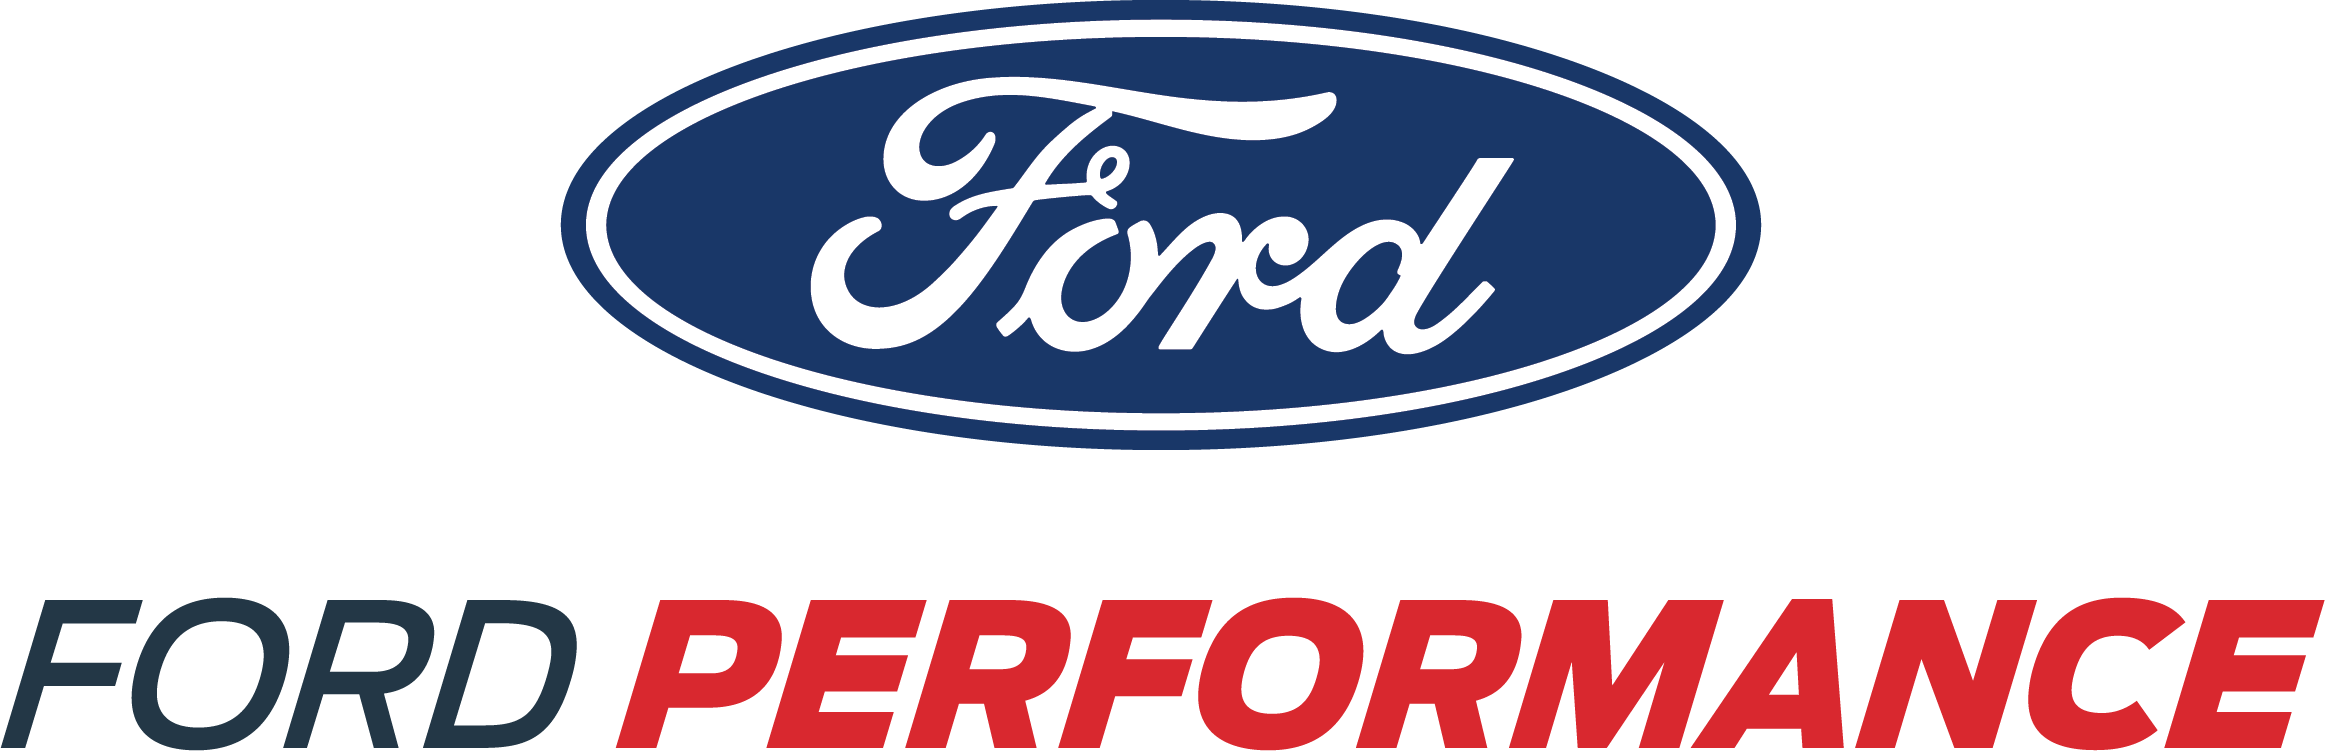 Ford_performance_brand_logo